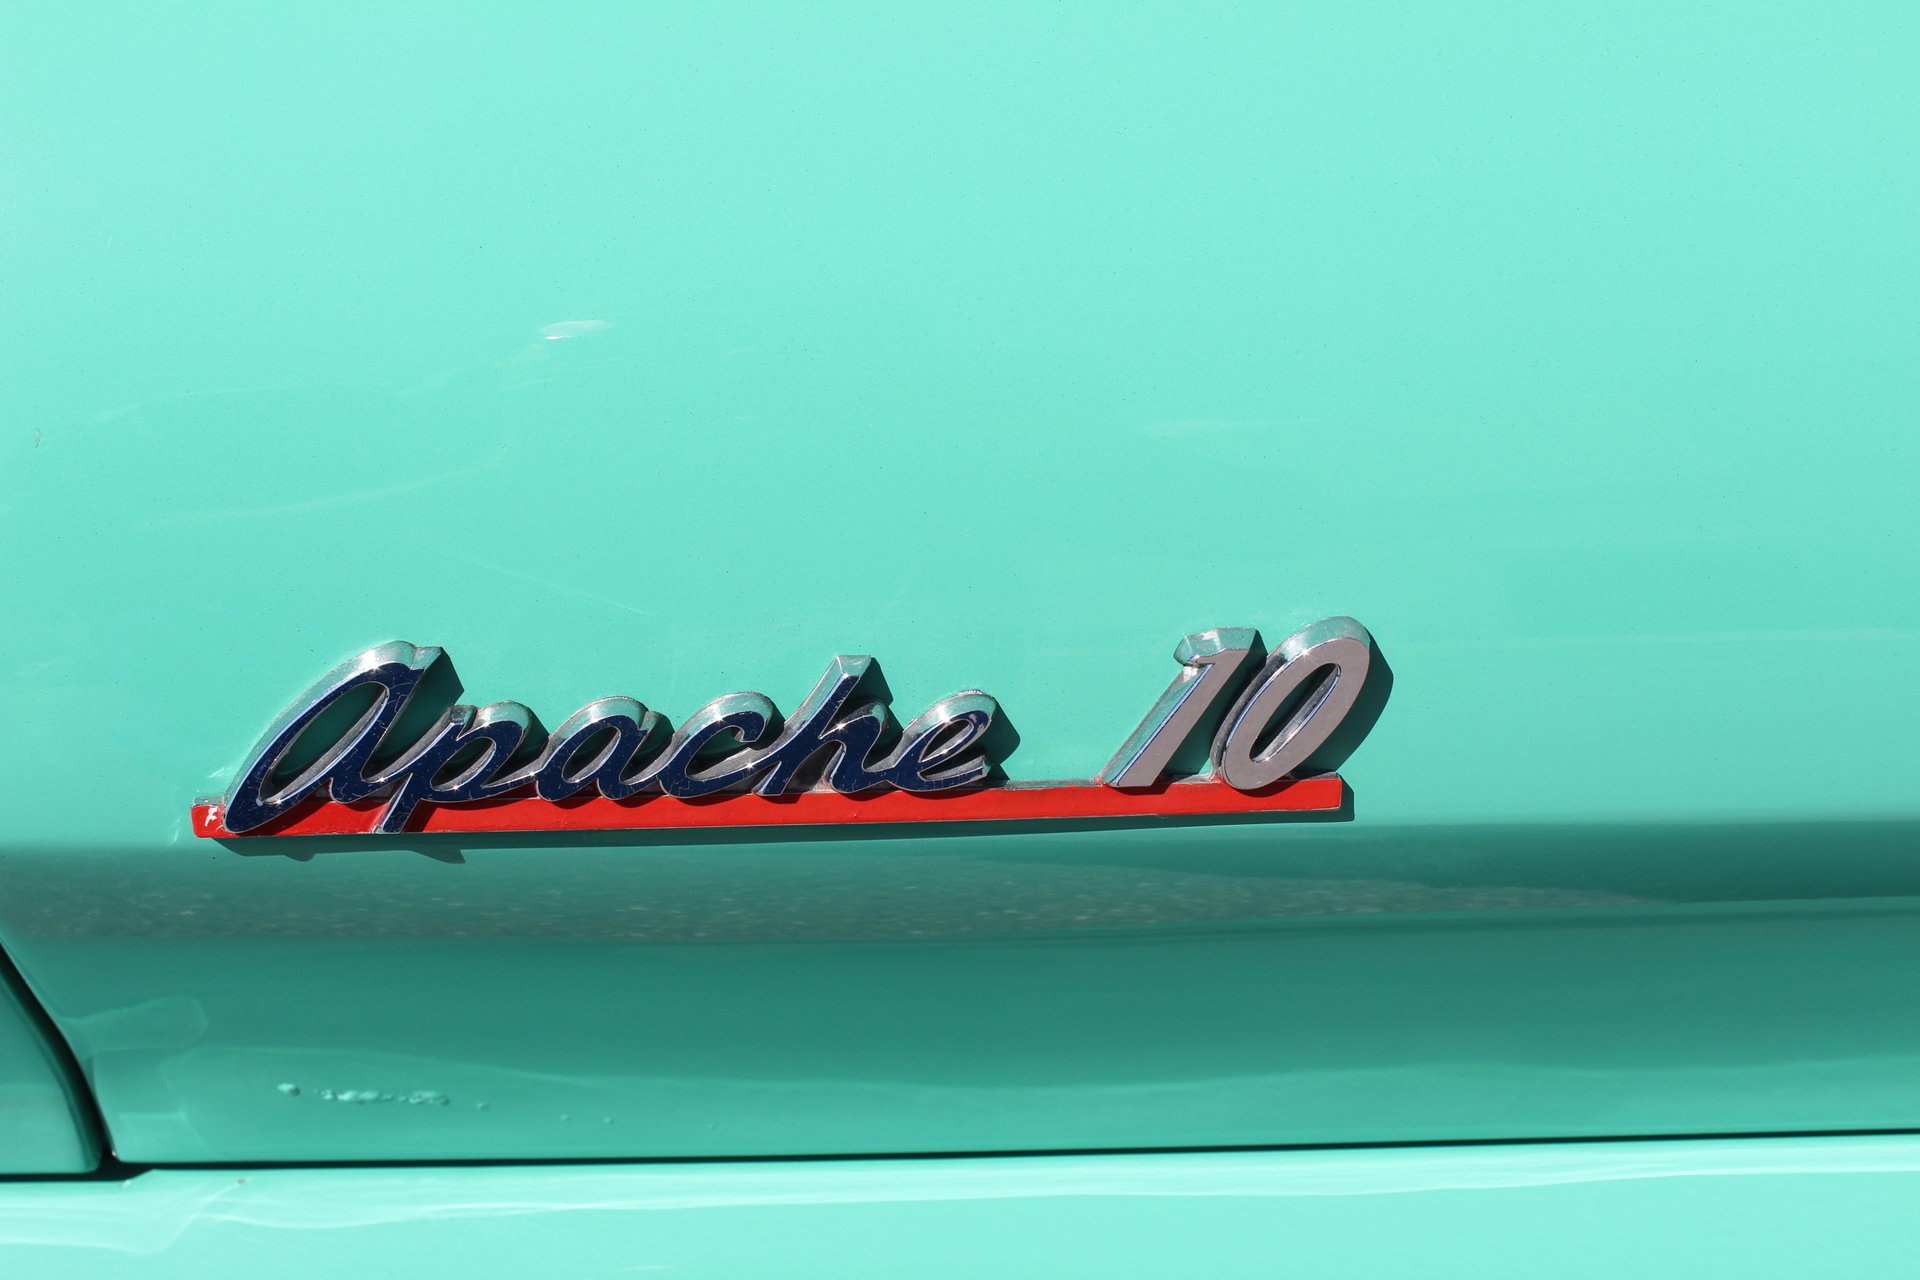 For Sale 1961 Chevrolet Apache